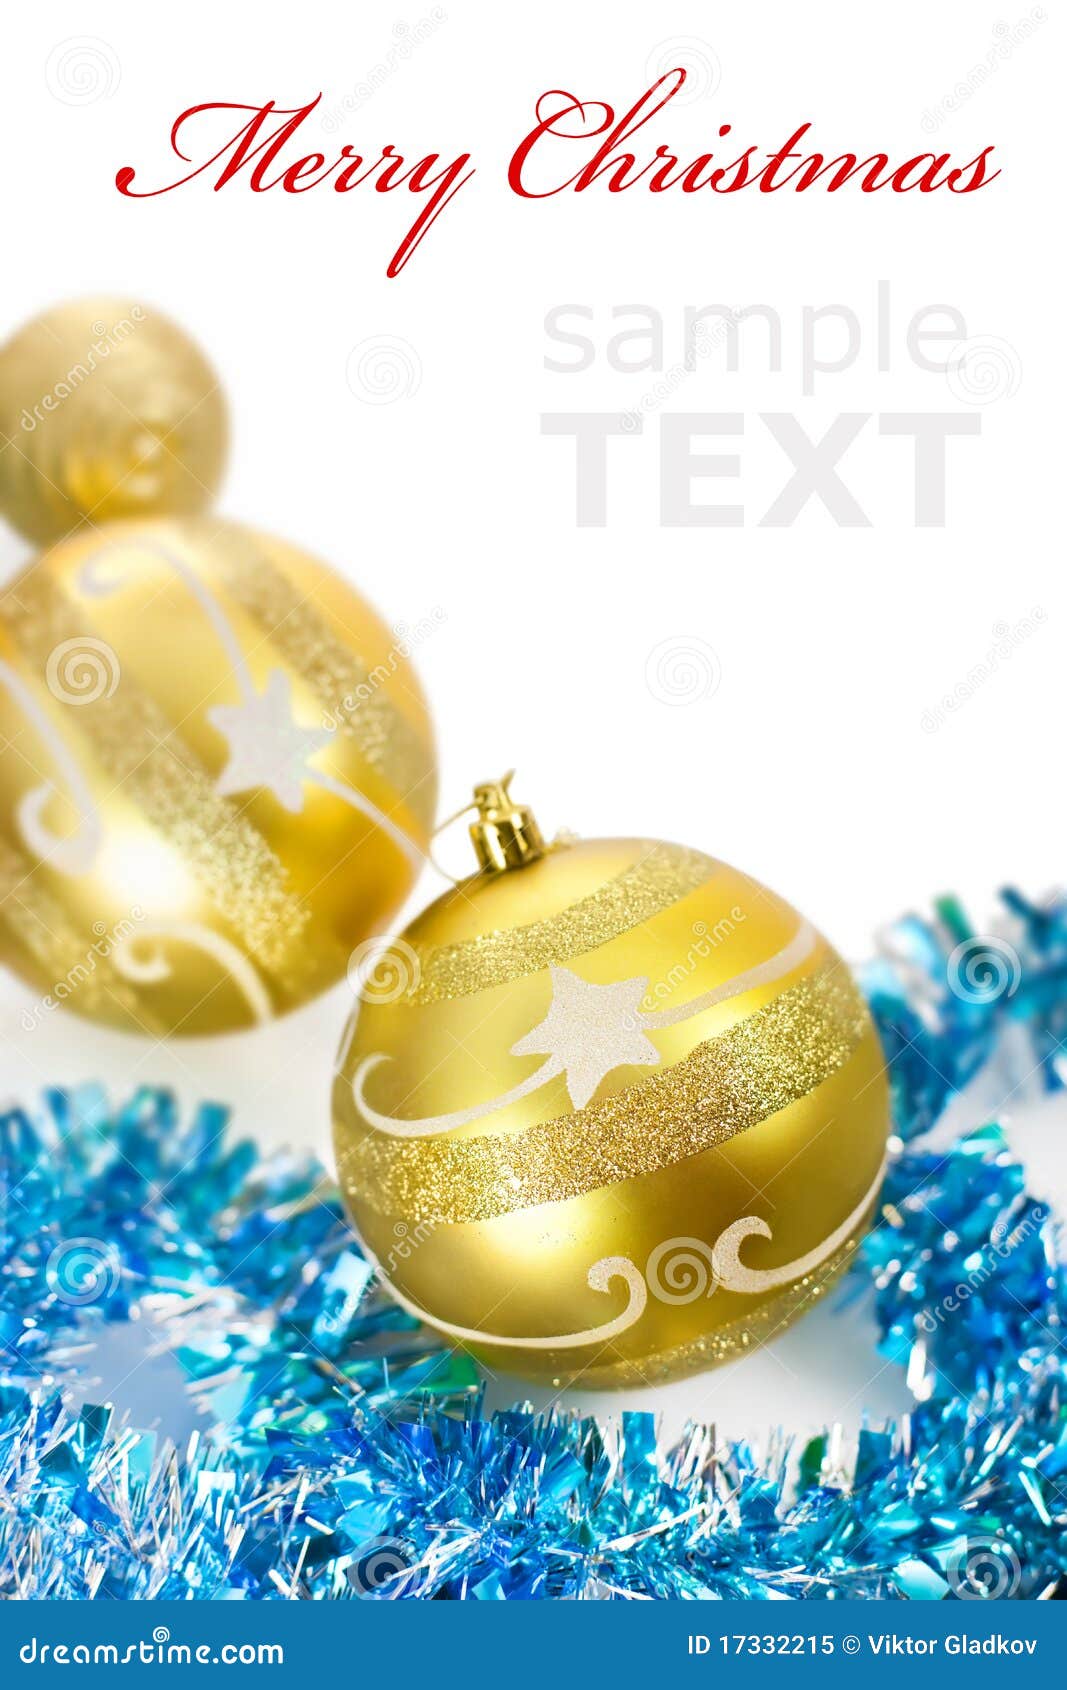 Yellow Christmas Decorations Royalty Free Stock Photo - Image ...